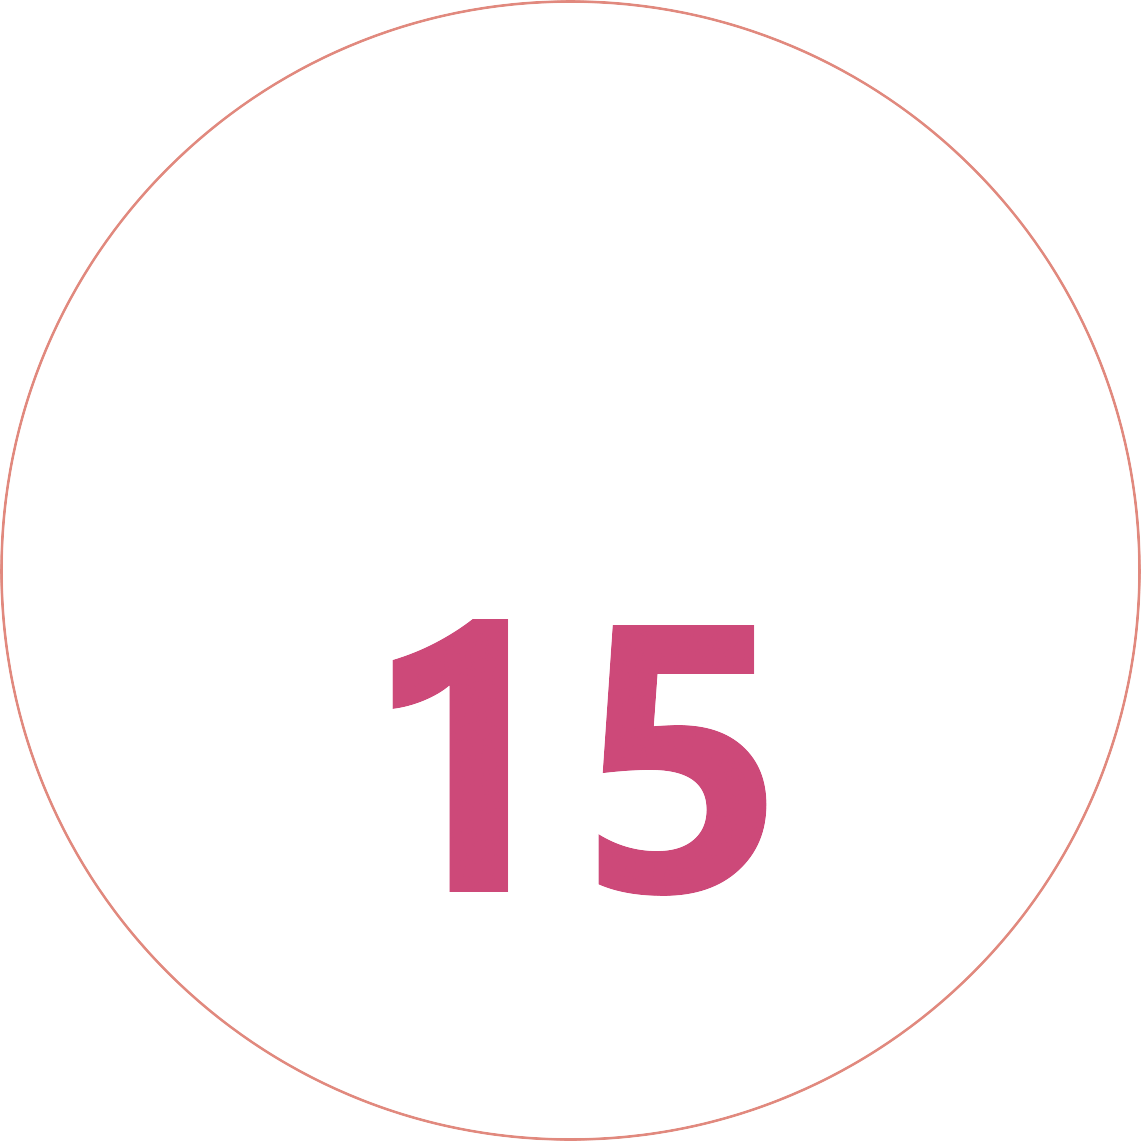 SpaceTech Solutions